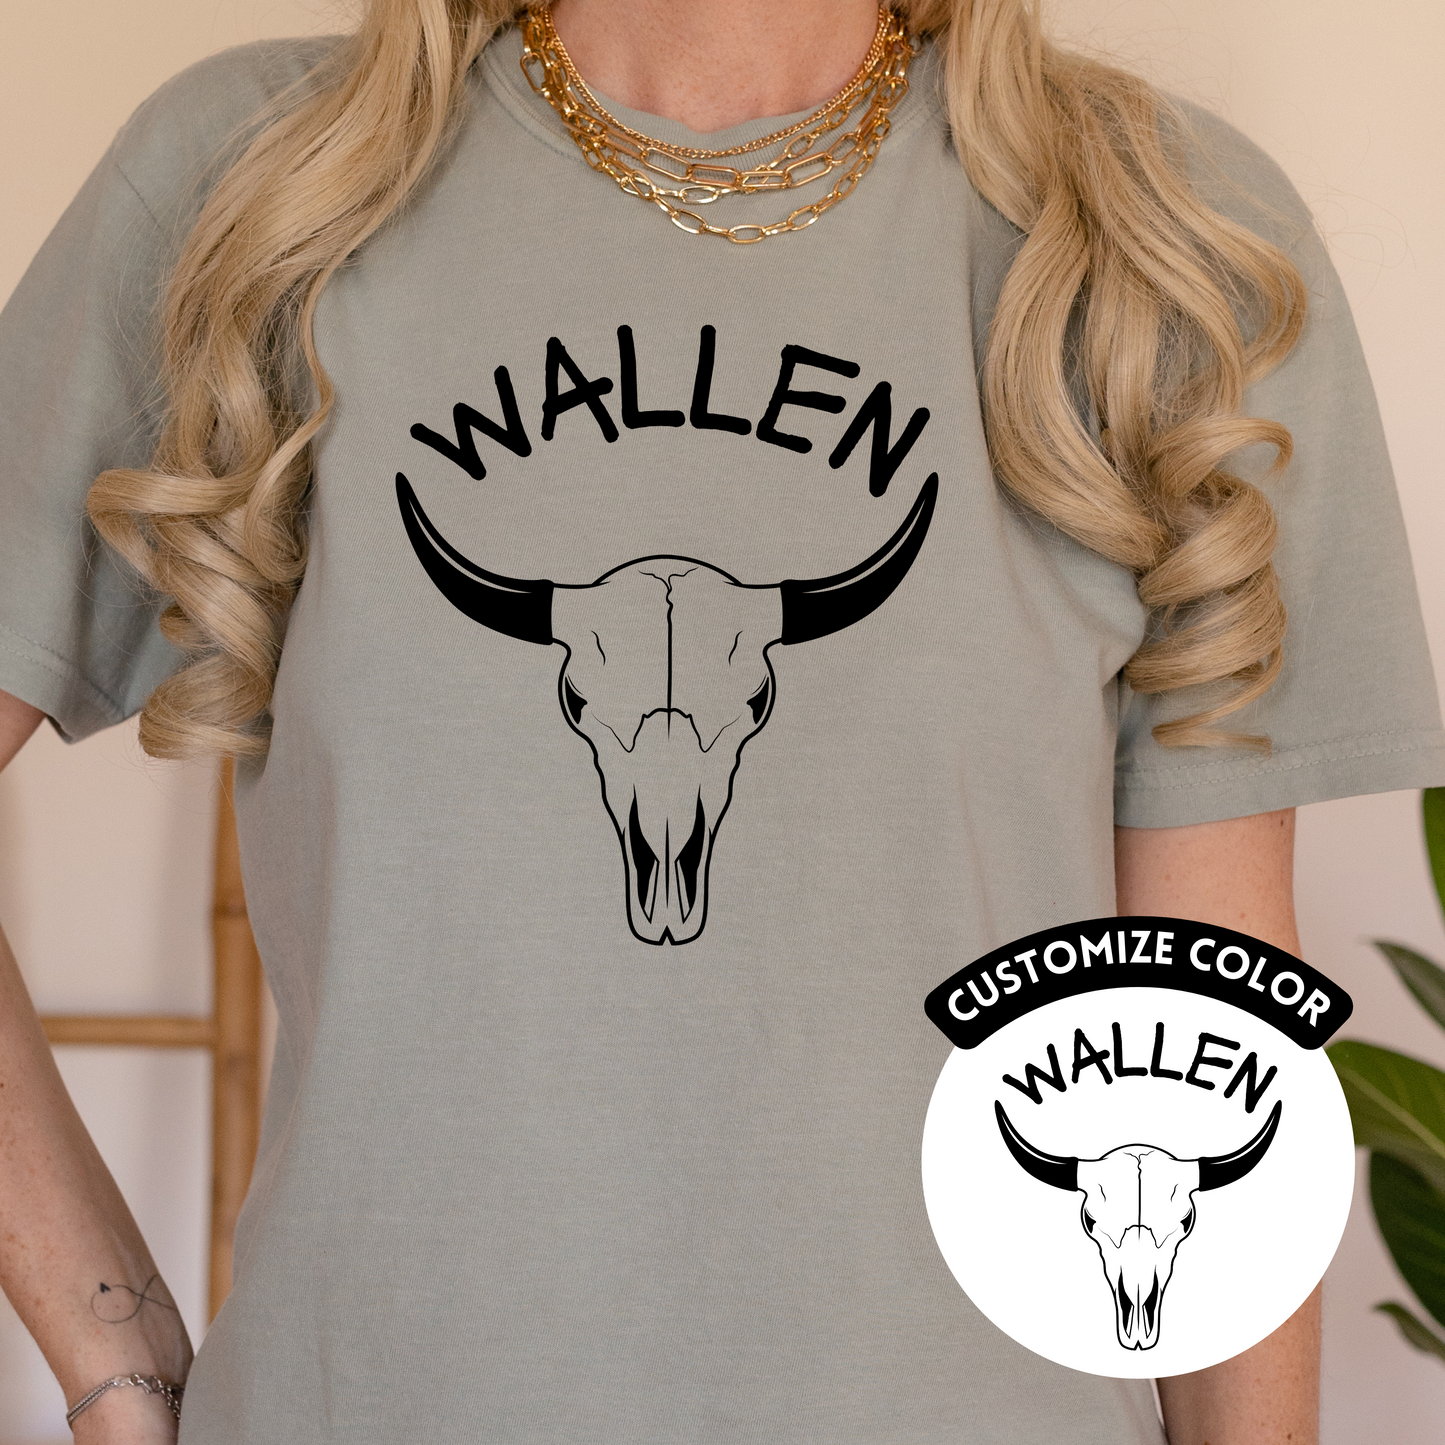 Wallen Bull Skull | Customize Color